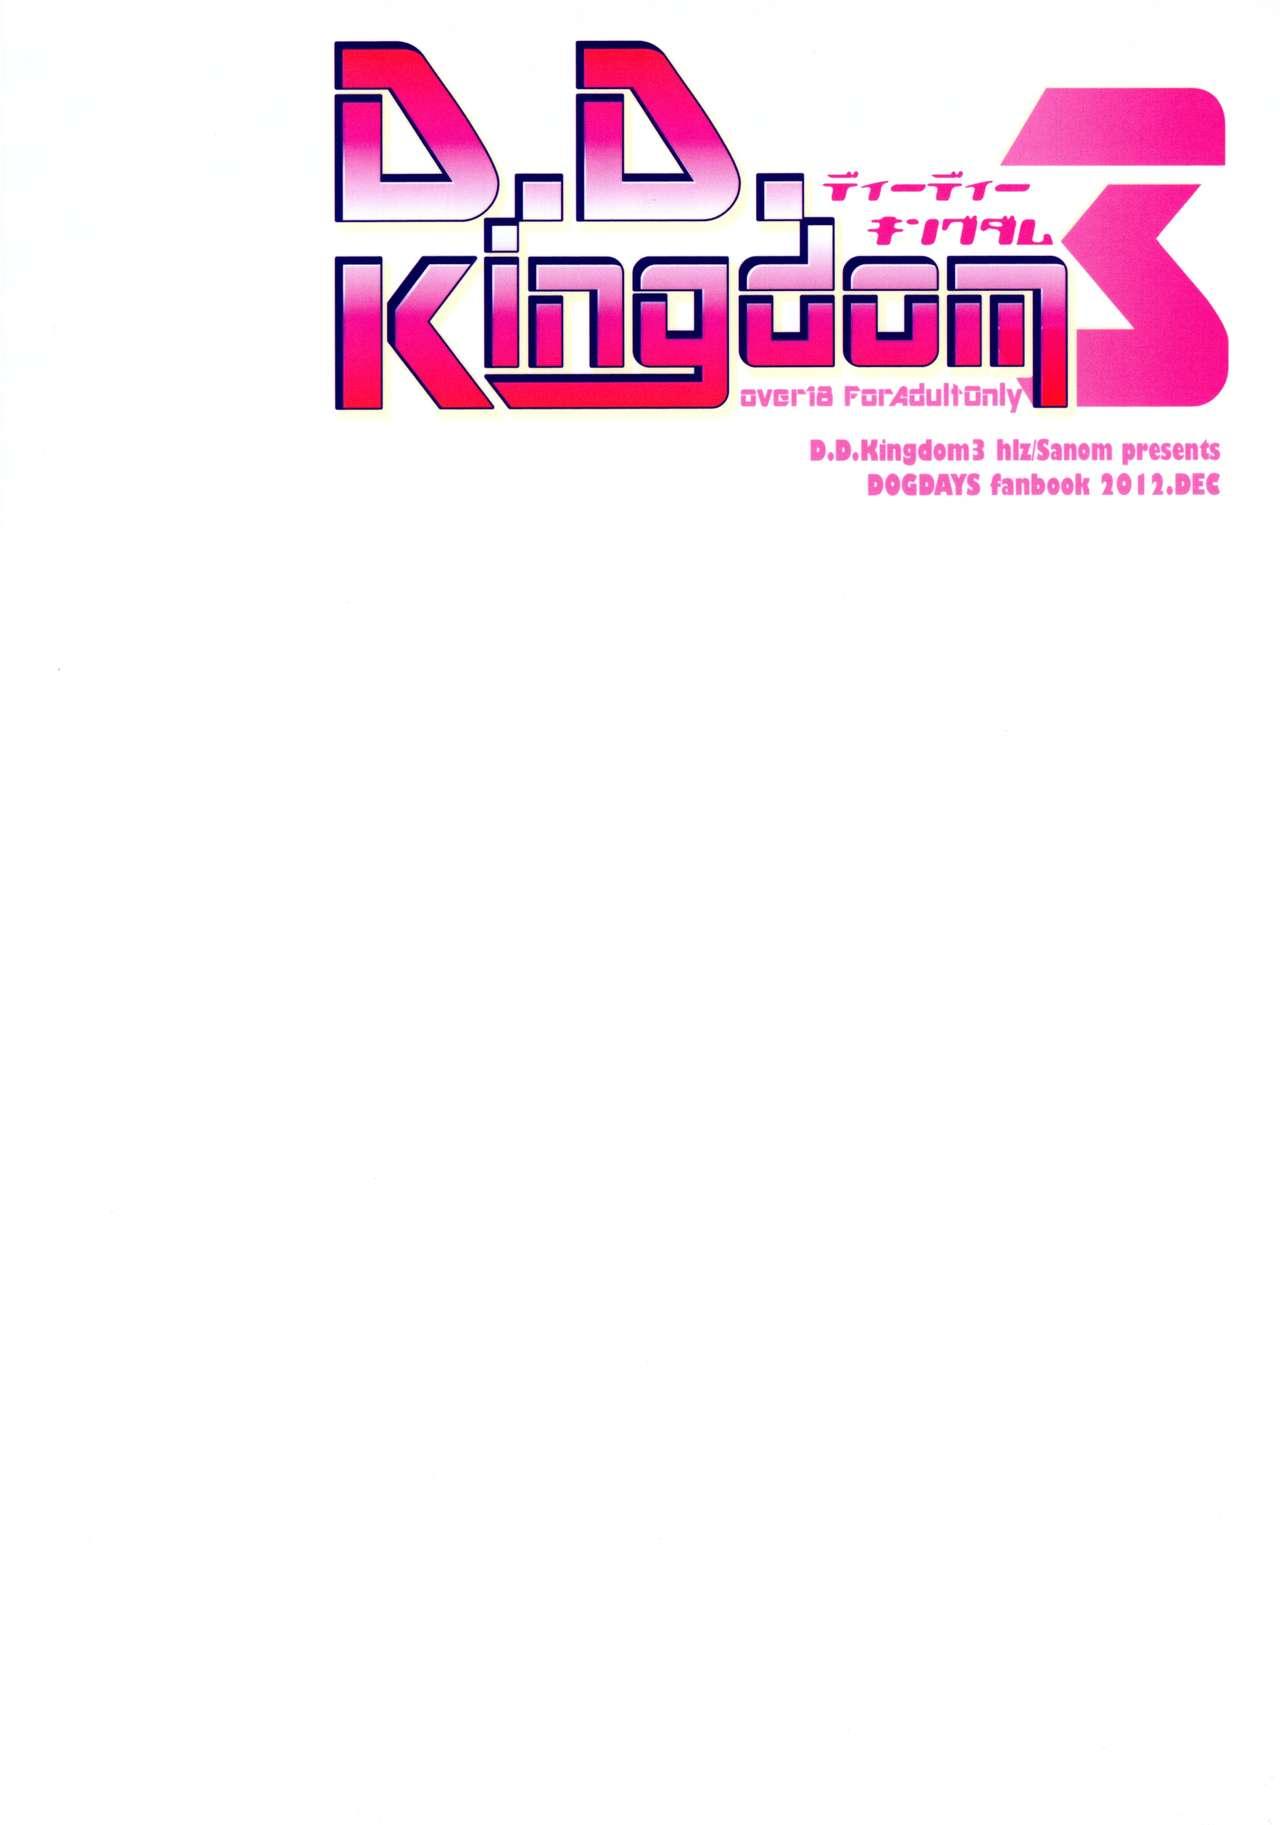 Spoon D.D.Kingdom3 - Dog days Full Movie - Page 2